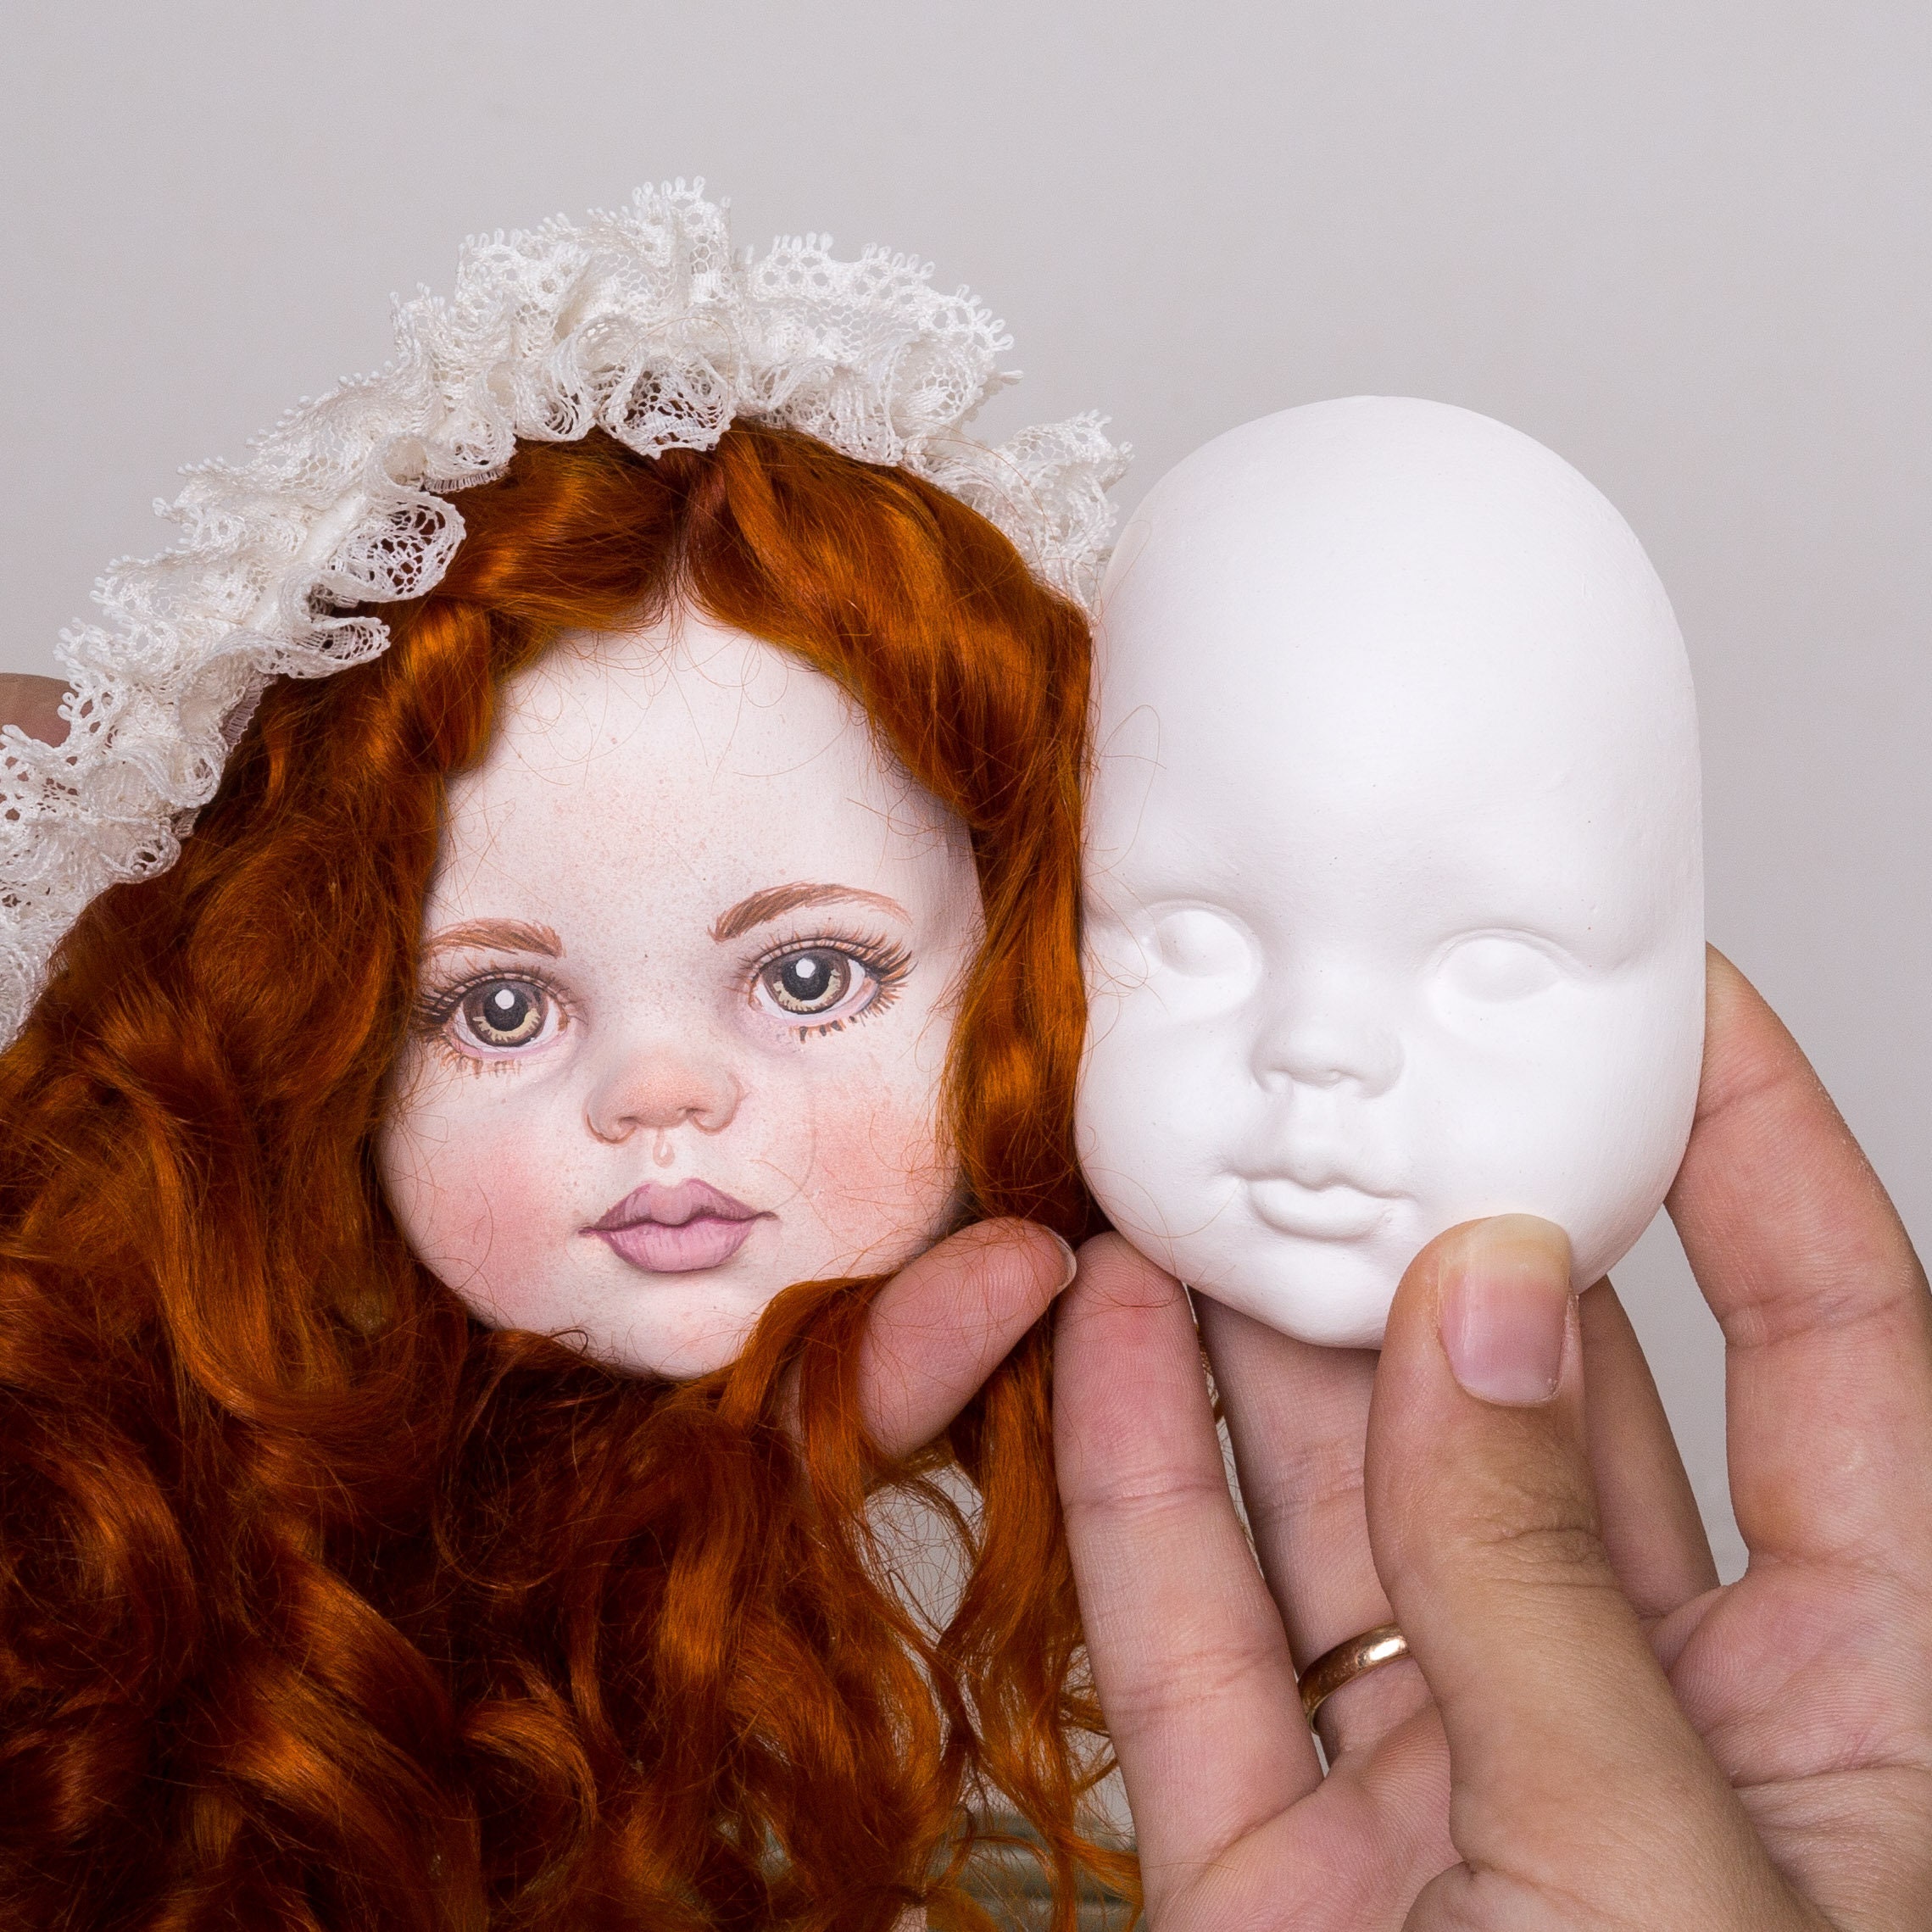 Купить куклу молд. Молды для кукол. Молд кукольного лица. Молды для кукольных лиц. Молд лицо куклы.